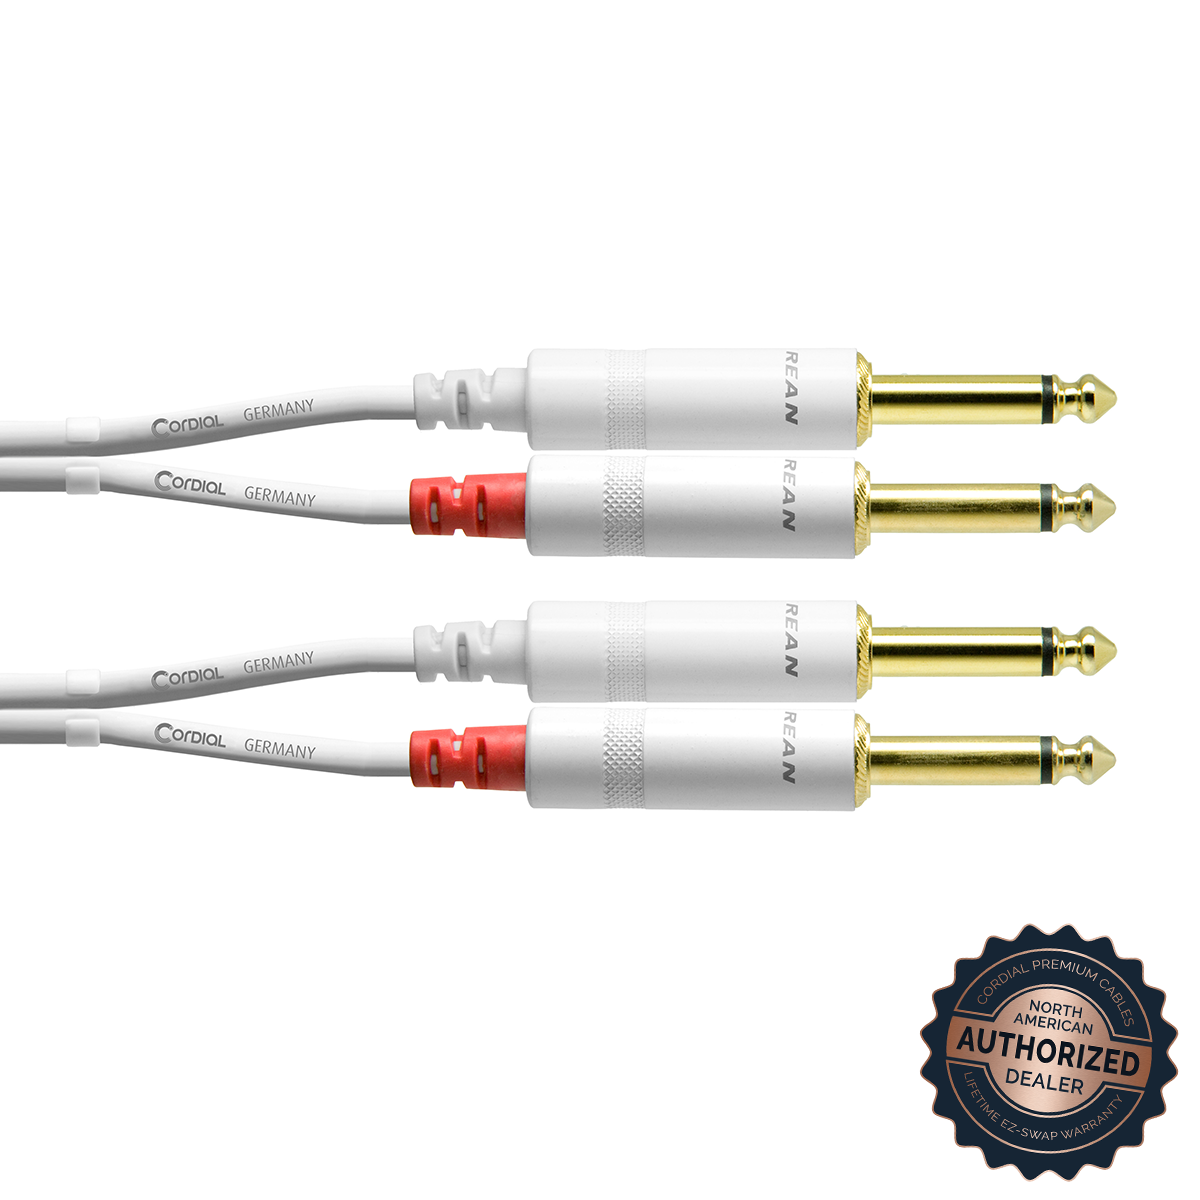 Cordial Unbalanced Dual-Mono Cable; White, 10ft.

SKU: CFU 3 PP - SNOW

(2x) 1/4" TS Male to (2x) 1/4" TS Male; White, 10ft. 